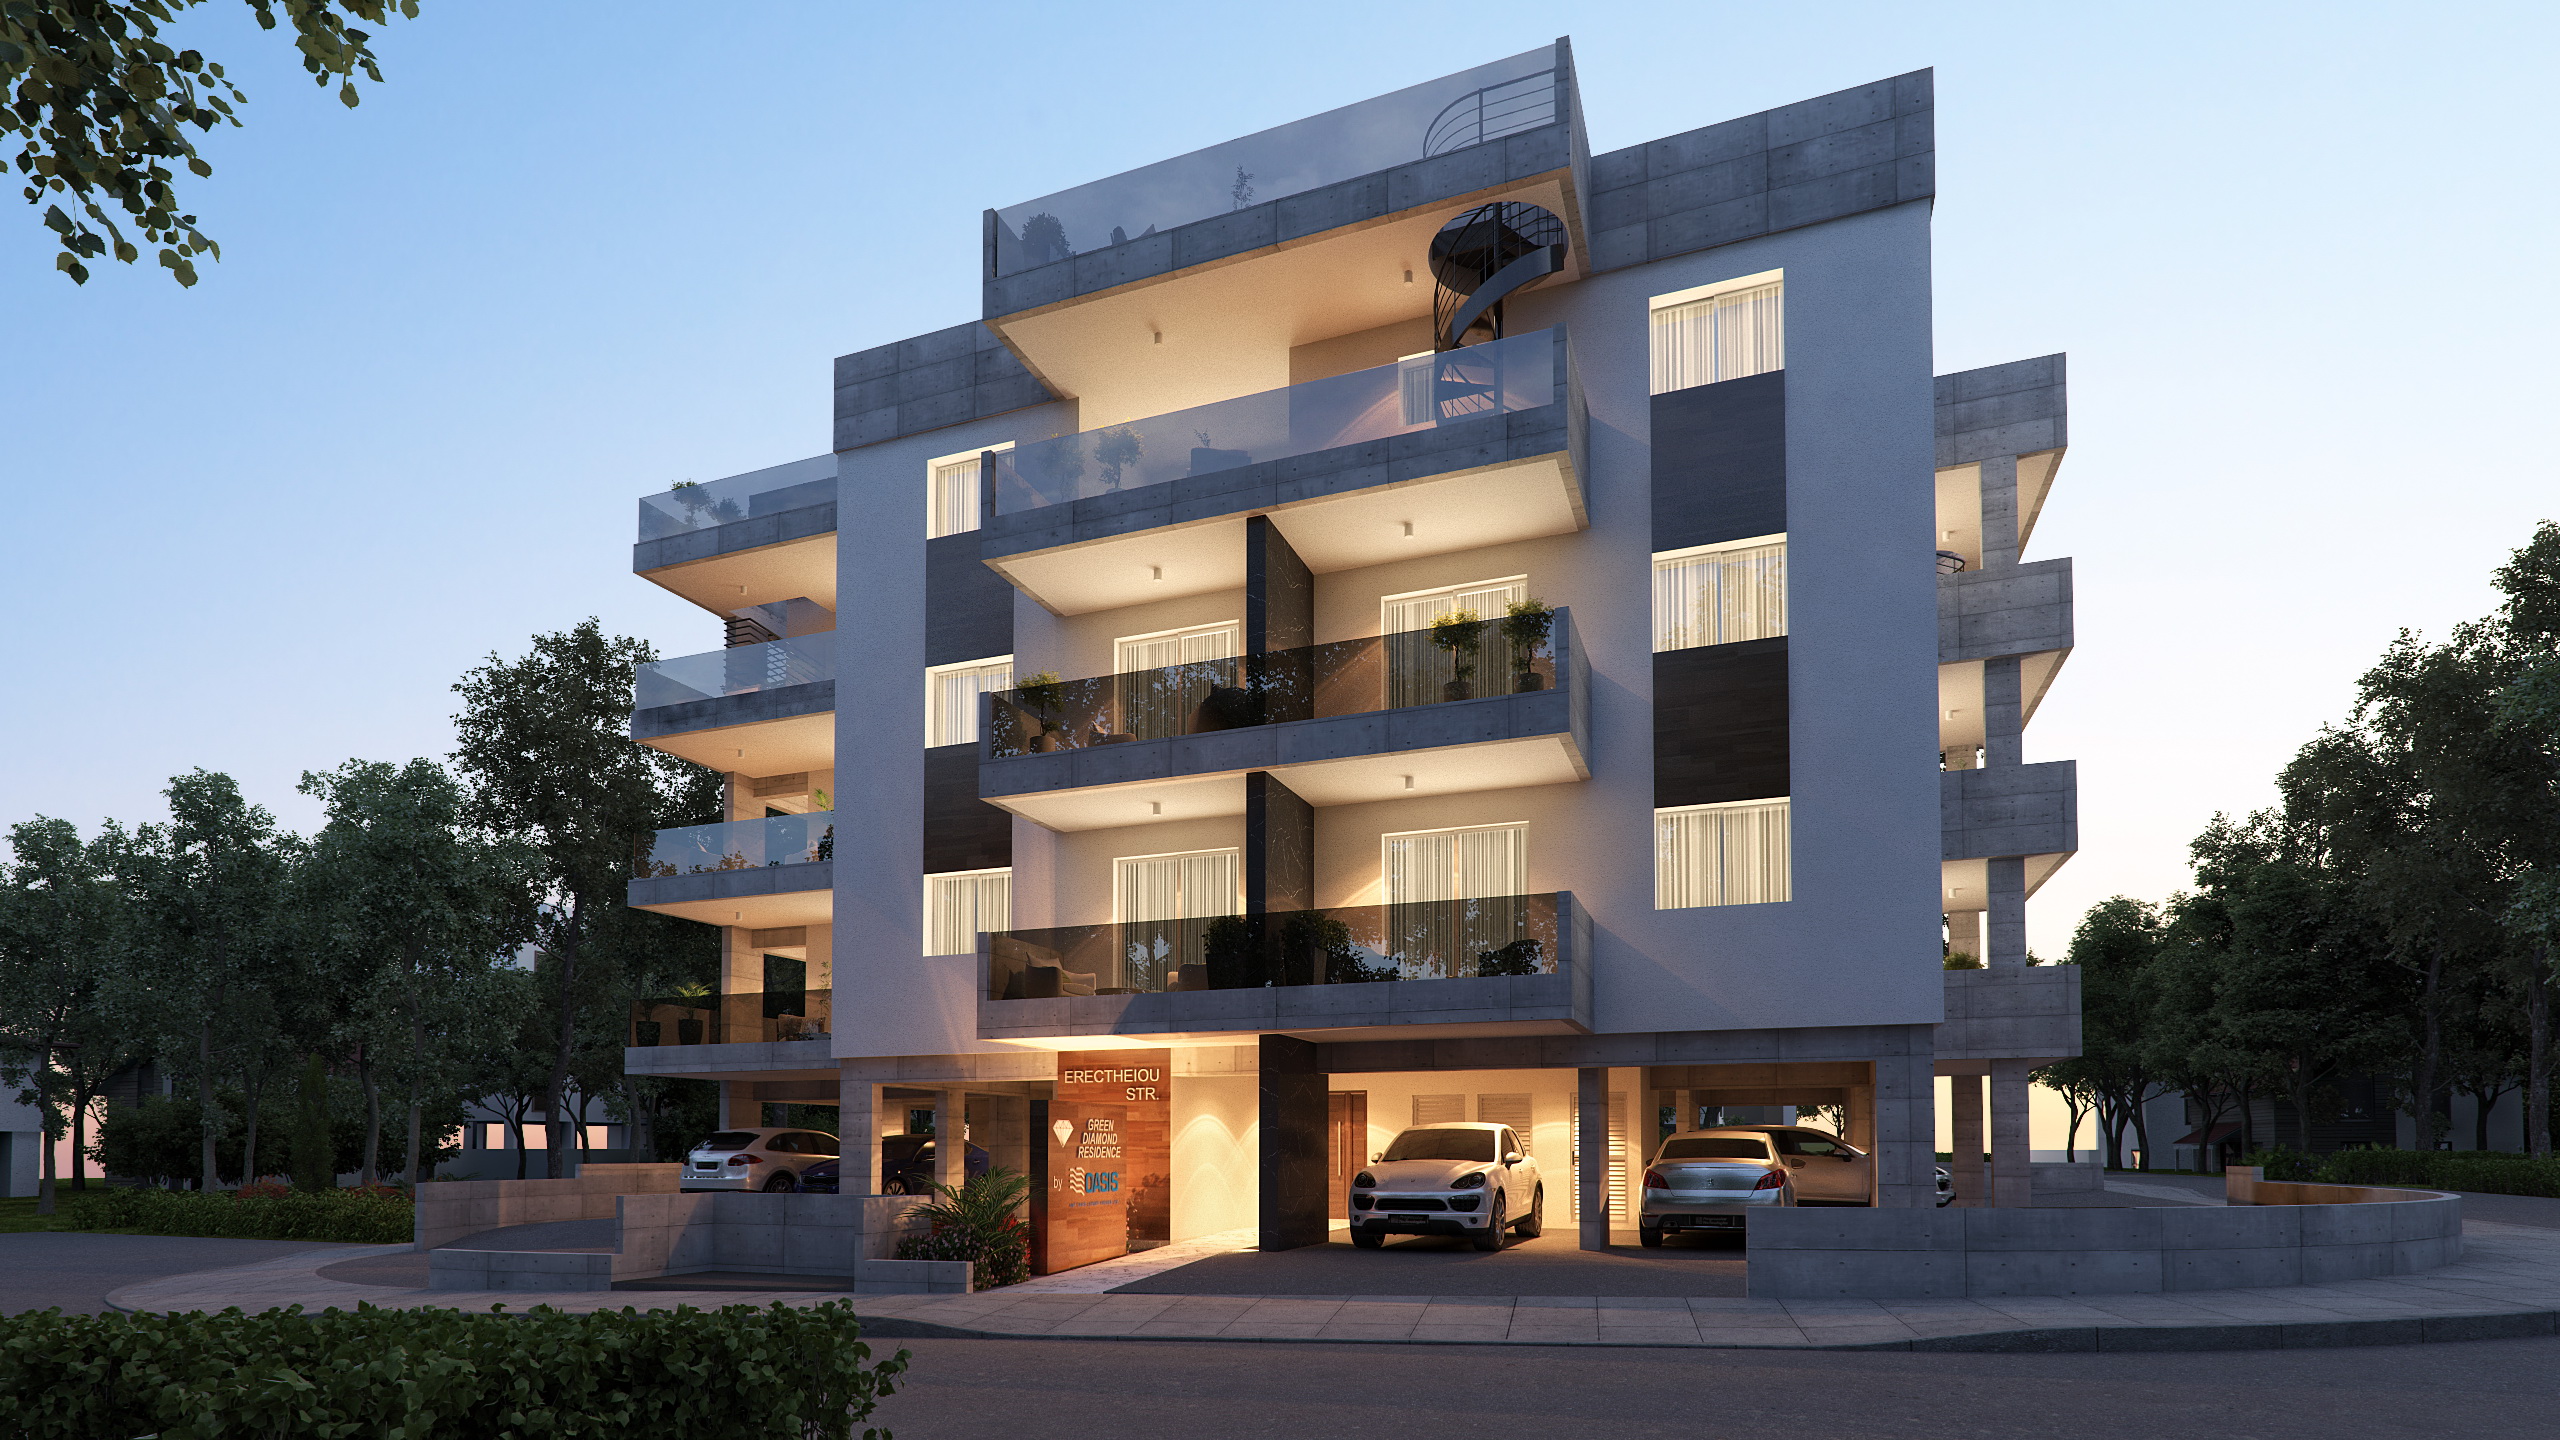 2 Bedroom Apartment for Sale in Larnaca – Tsakilero